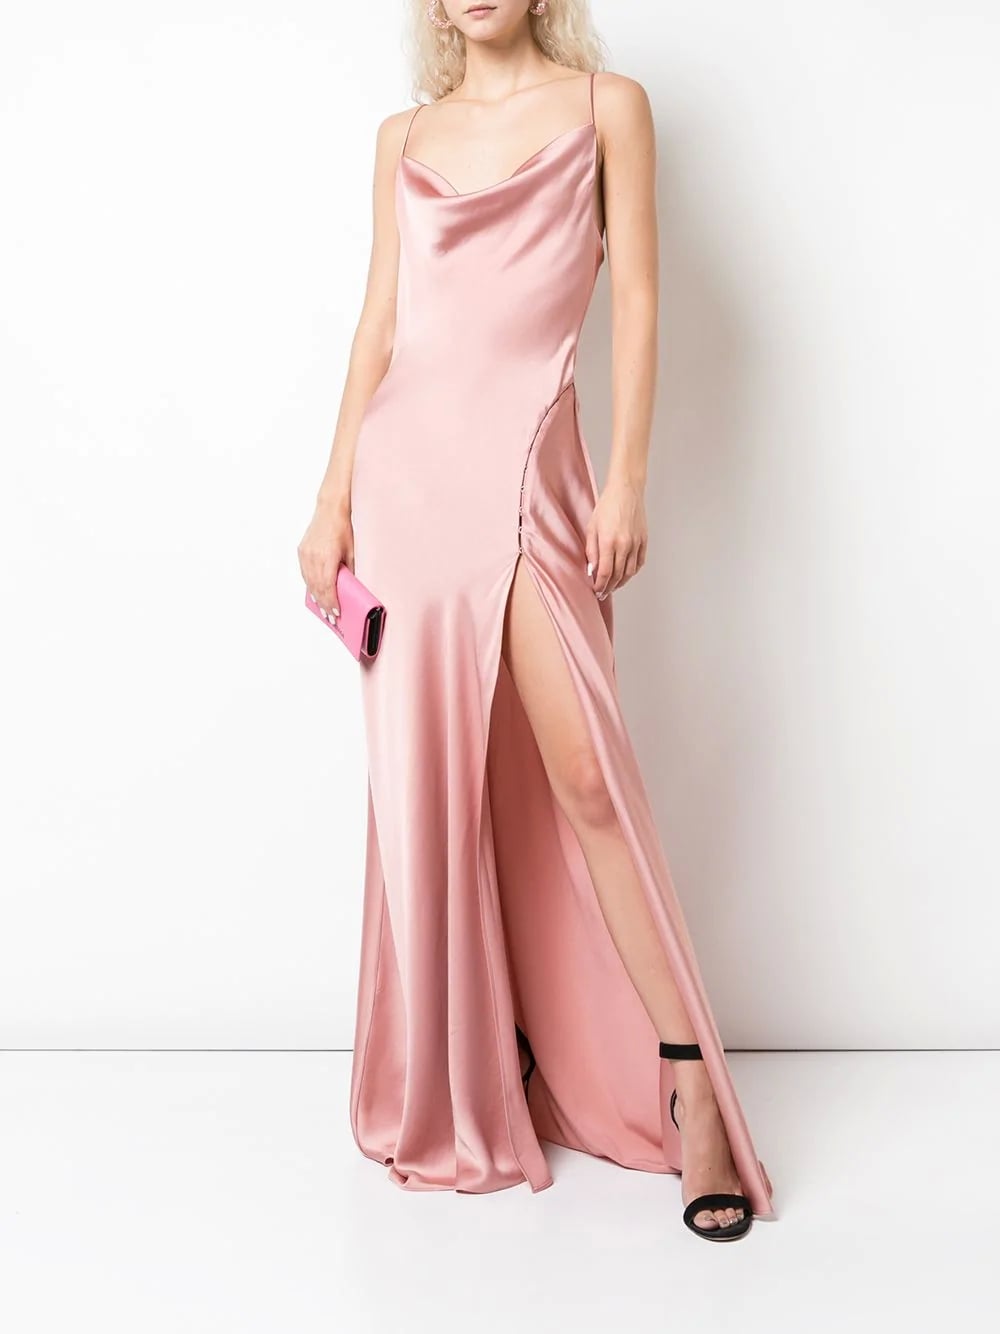 Jonathan Simkhai Embroidered Lace Bustier Gown New Wedding Dress Save 63% -  Stillwhite